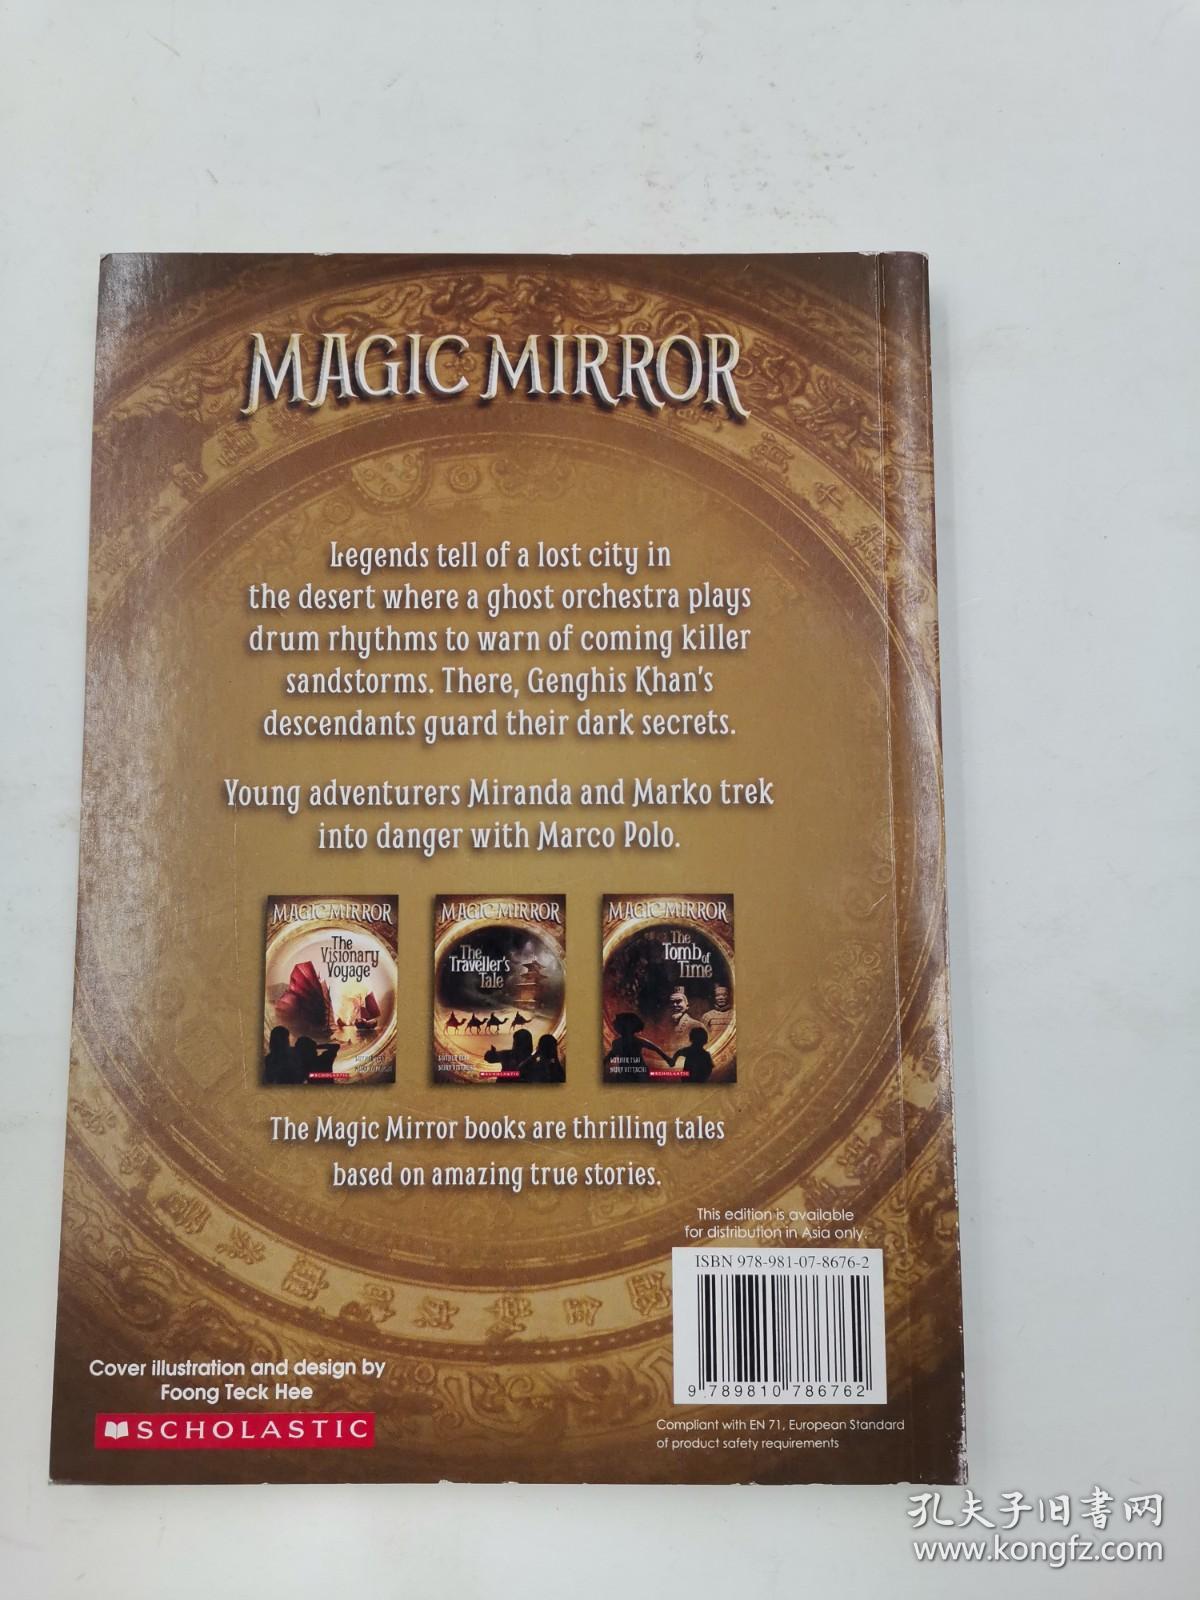 the traveller's tale  (magic mirror)